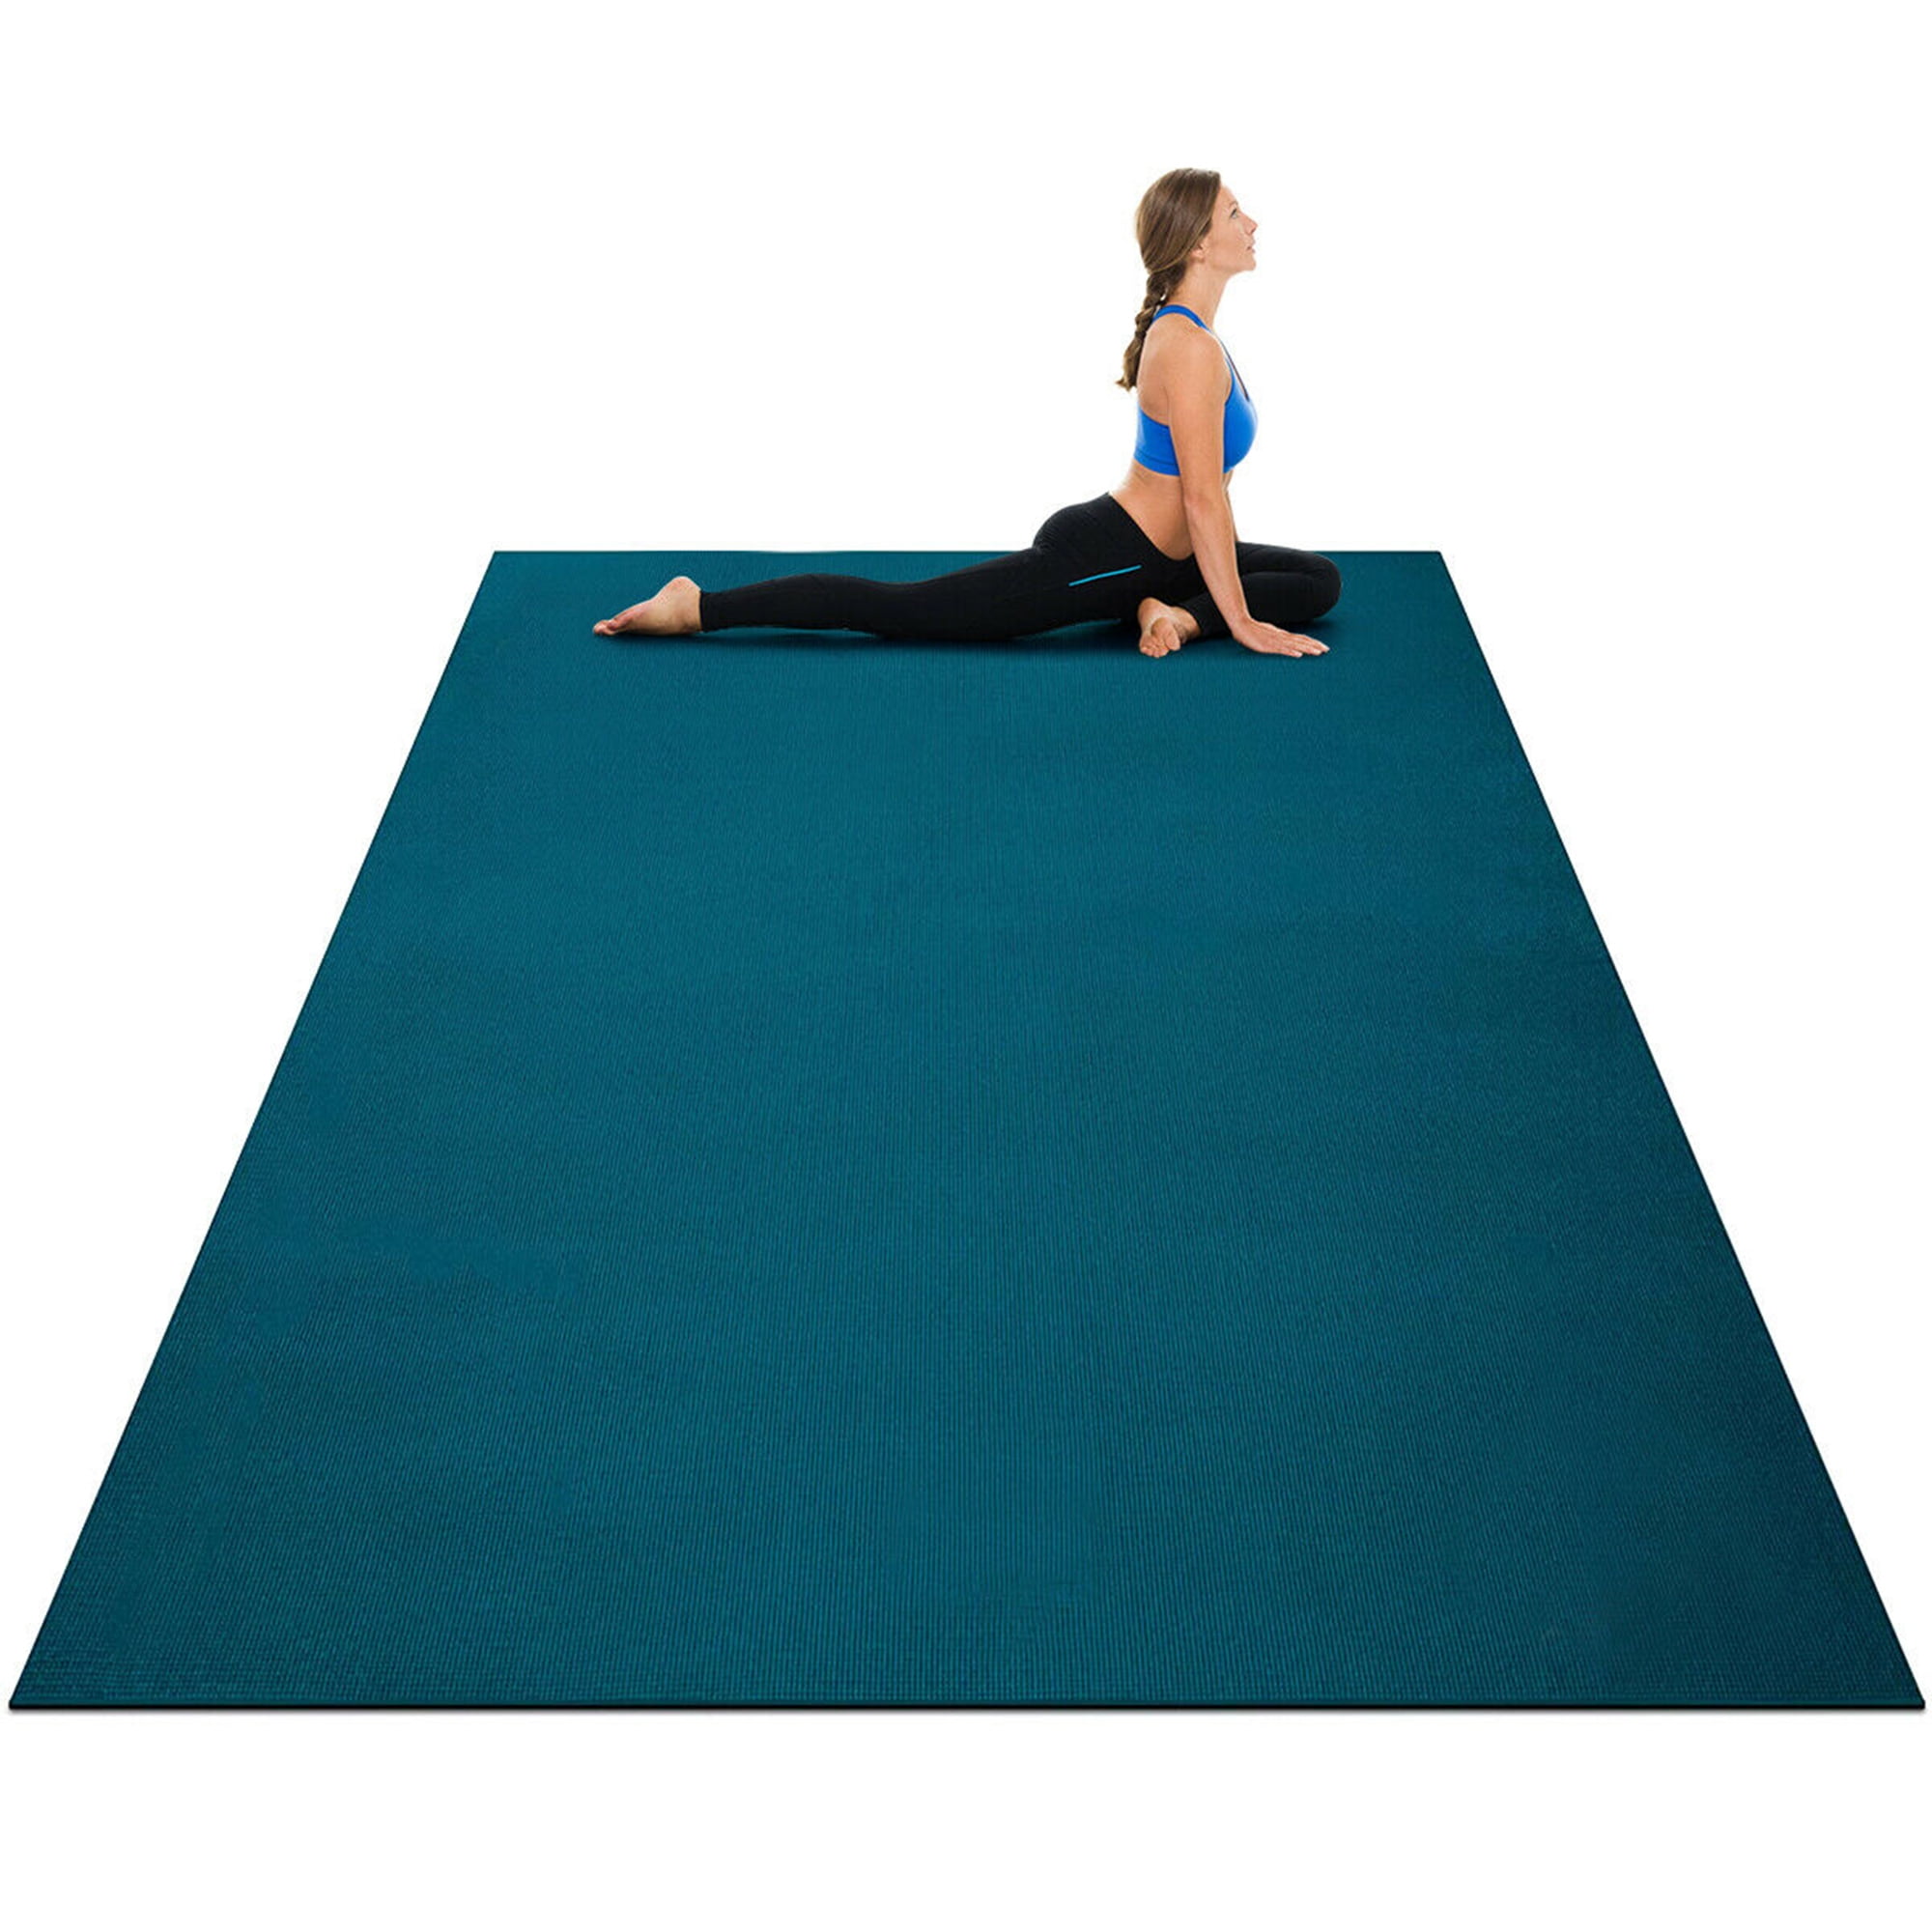 Fitness Mad Tread Foam Roller Yoga Pilates Stretching Gym Massage 